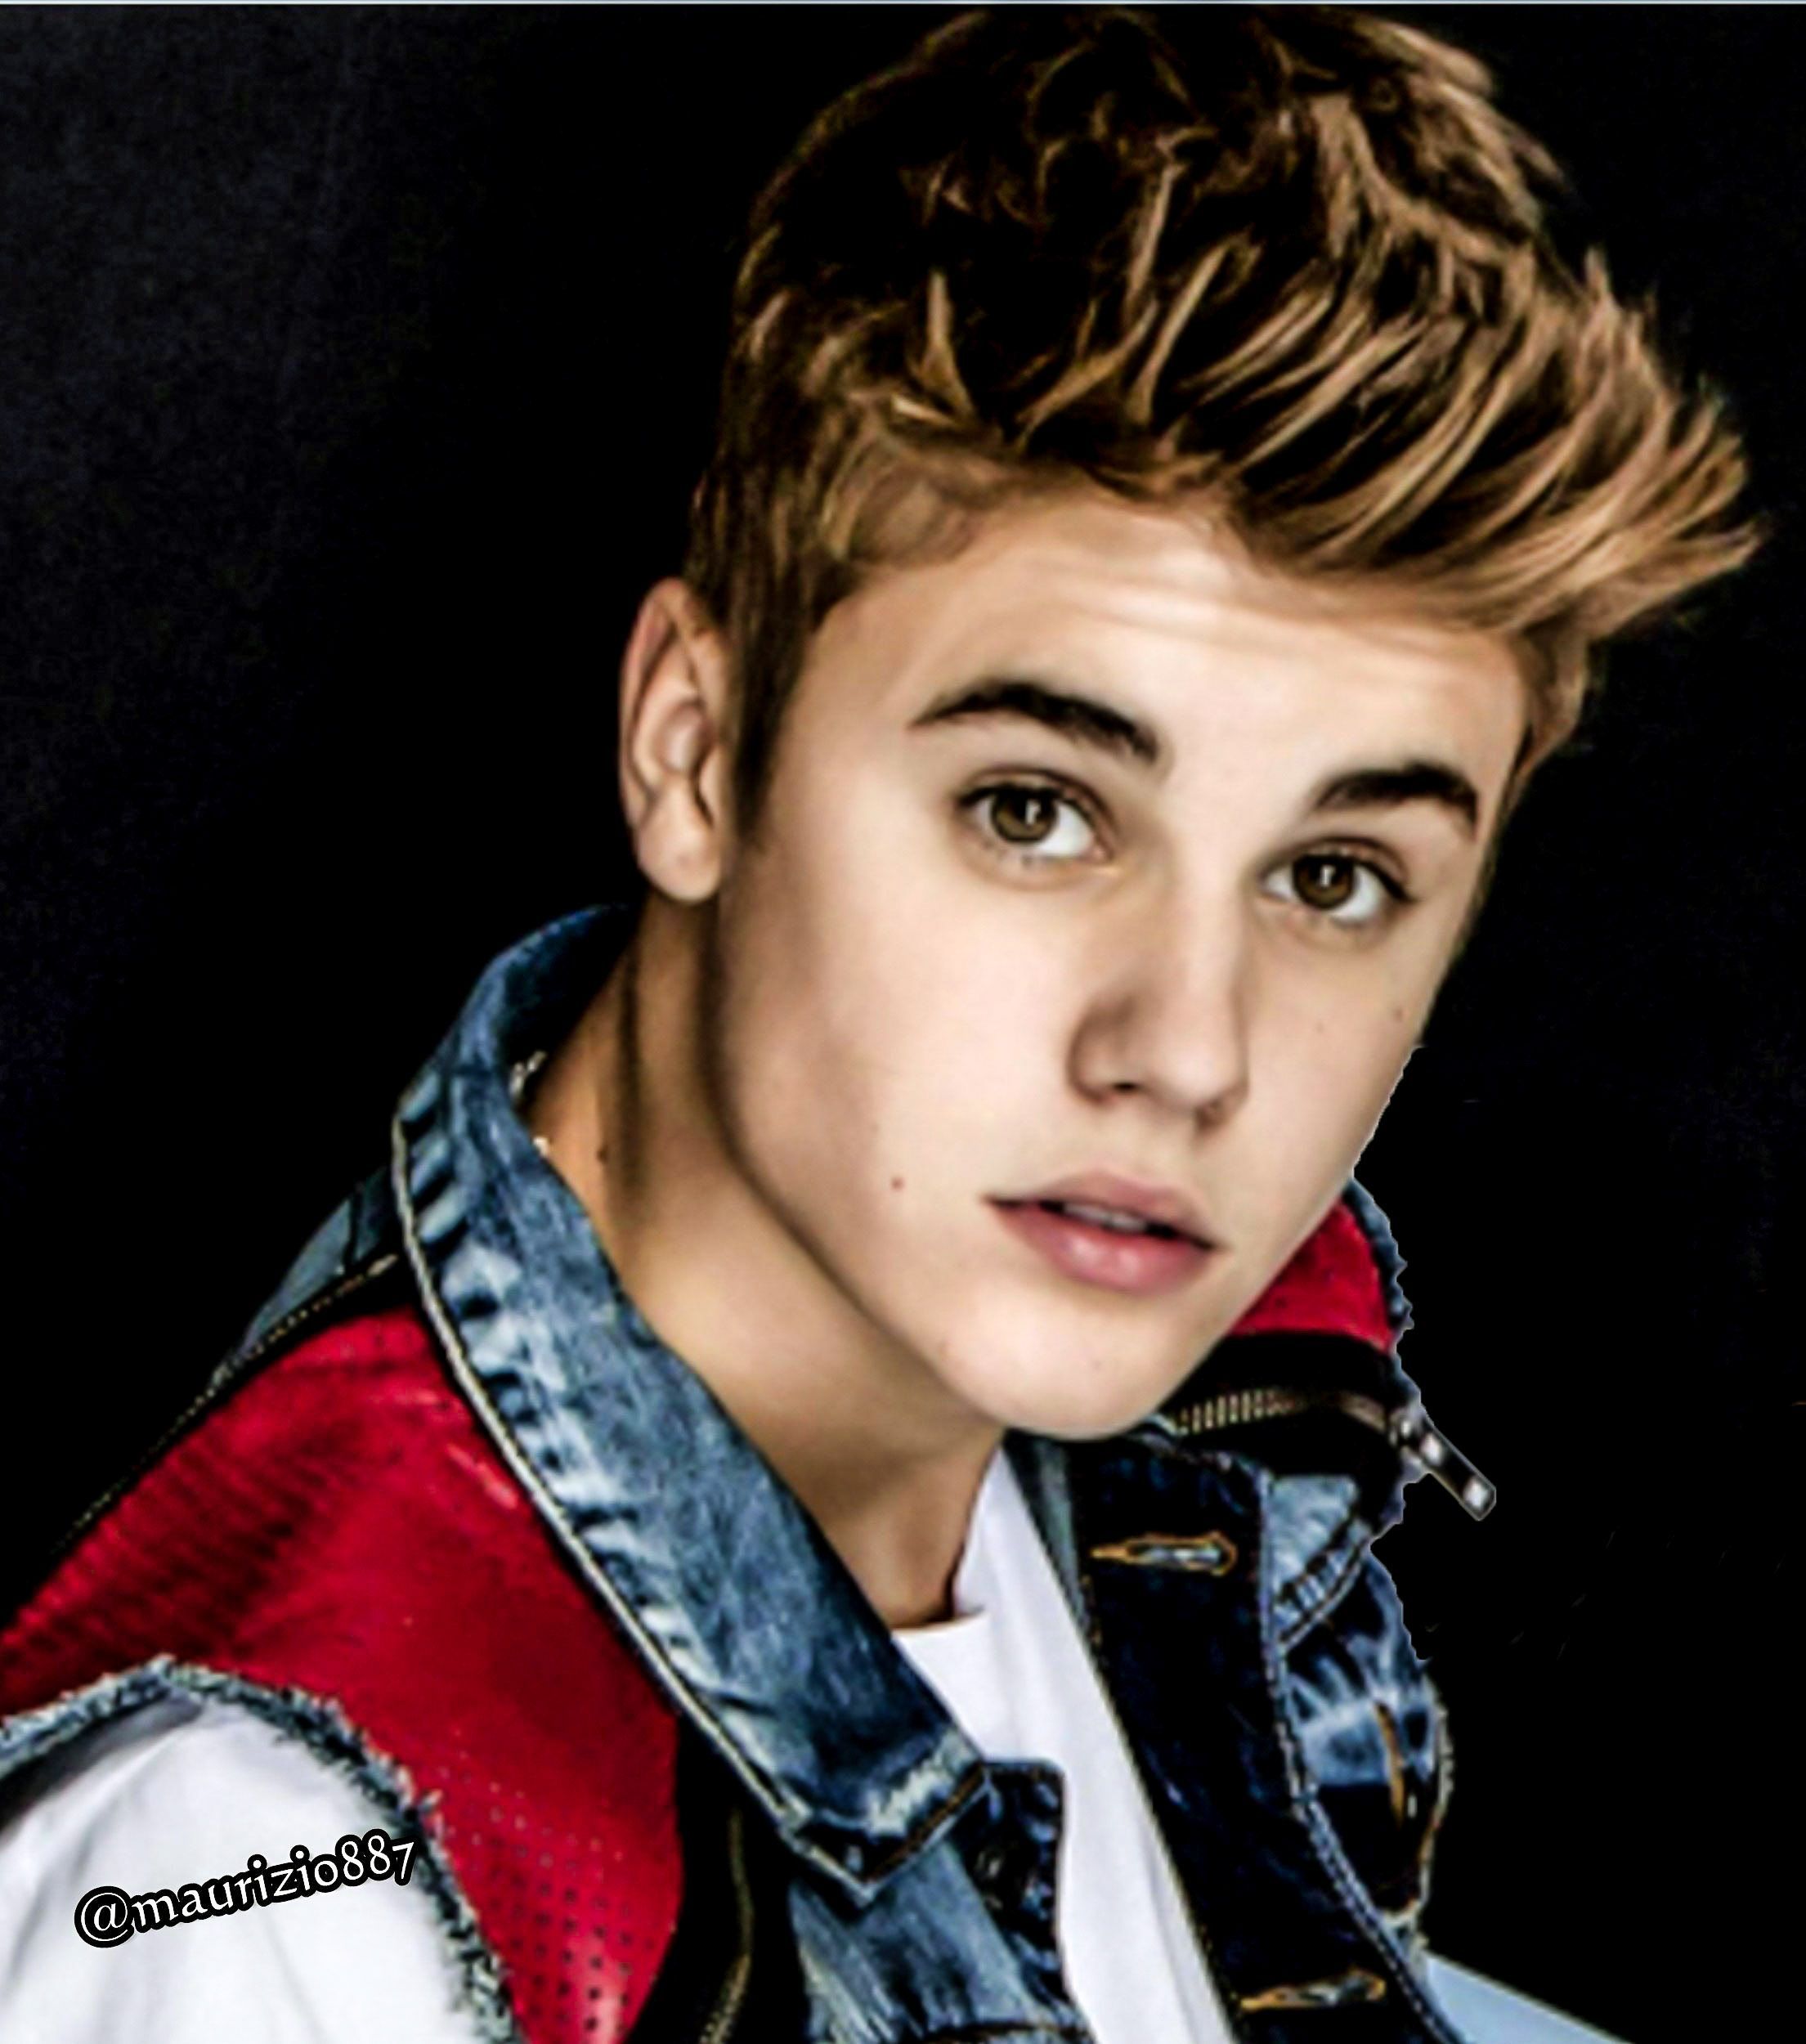 Justin Bieber Wallpaper HD 2015. Justin bieber